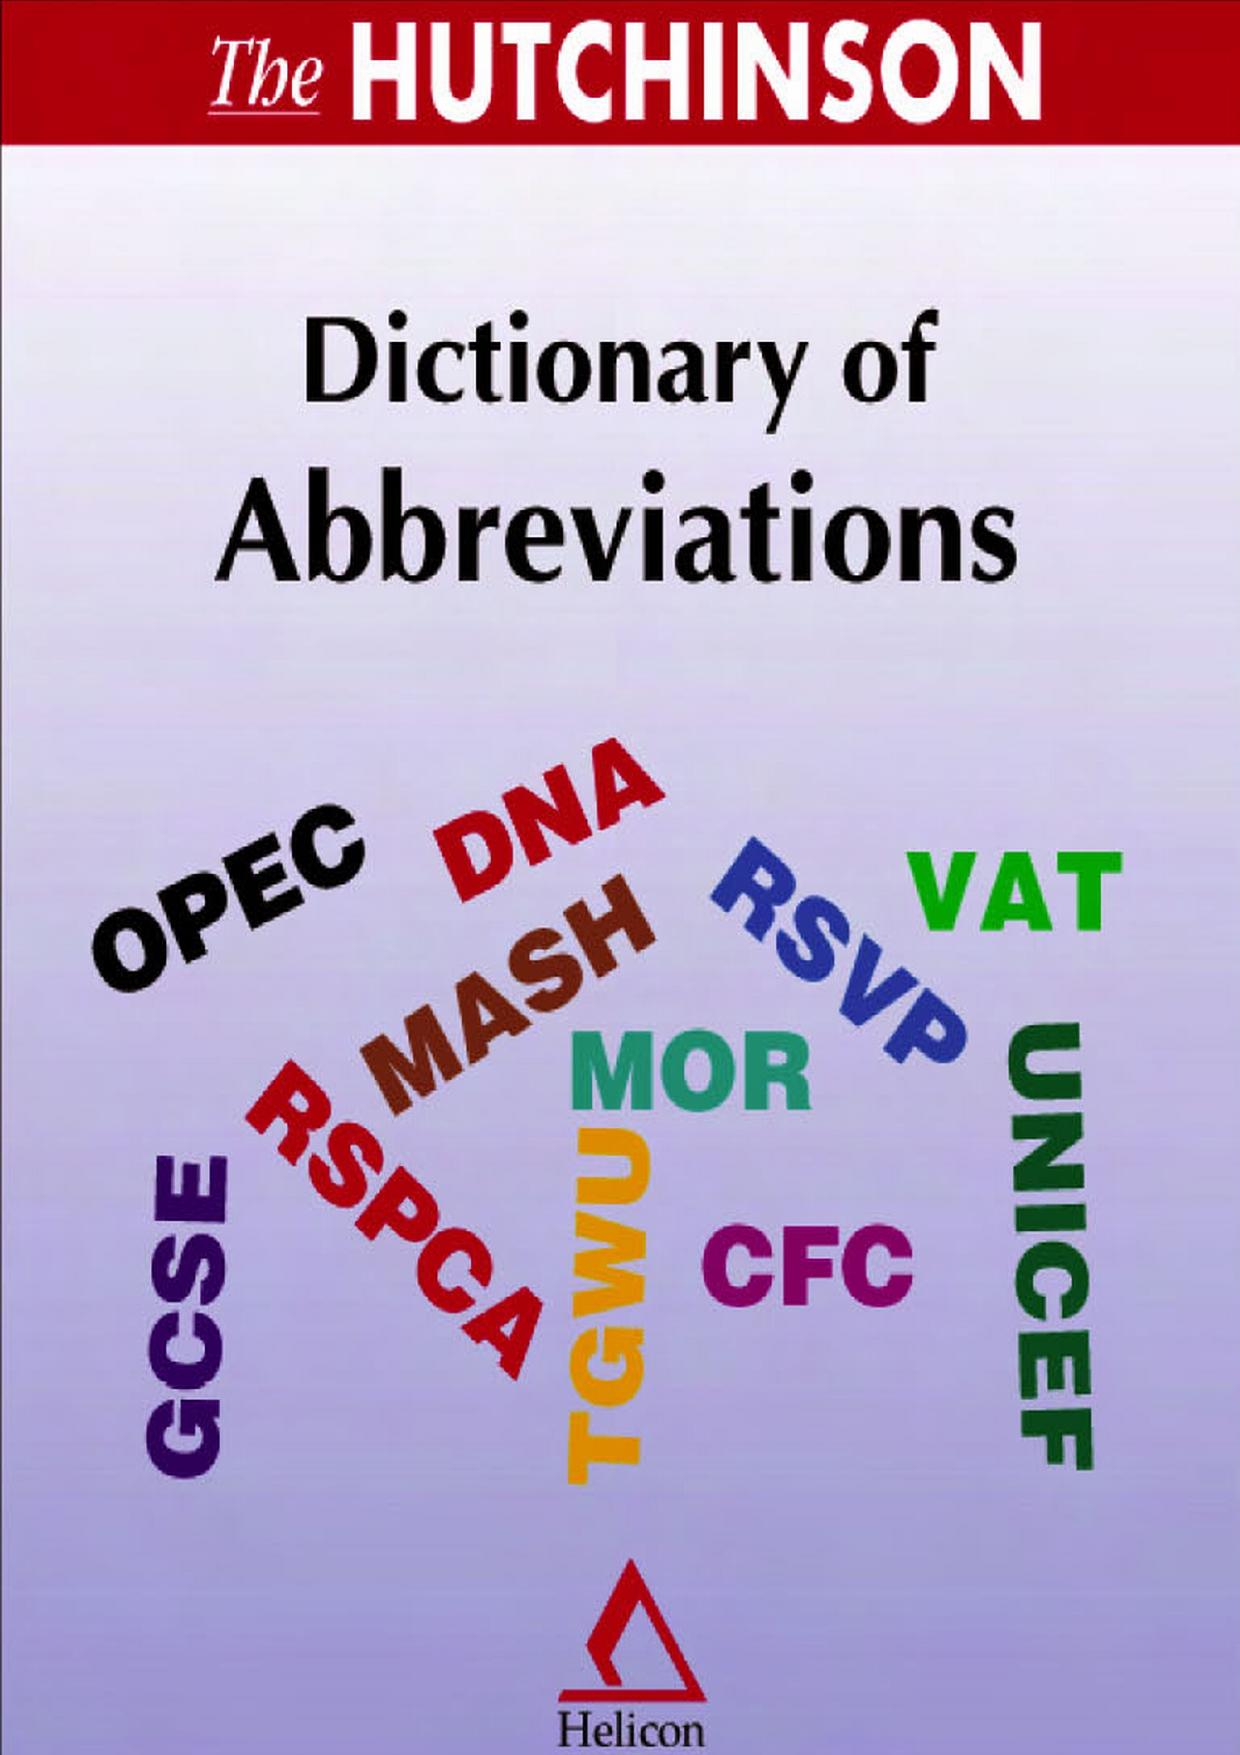 The Hutchinson Dictionary of Abbreviations (Hutchinson)